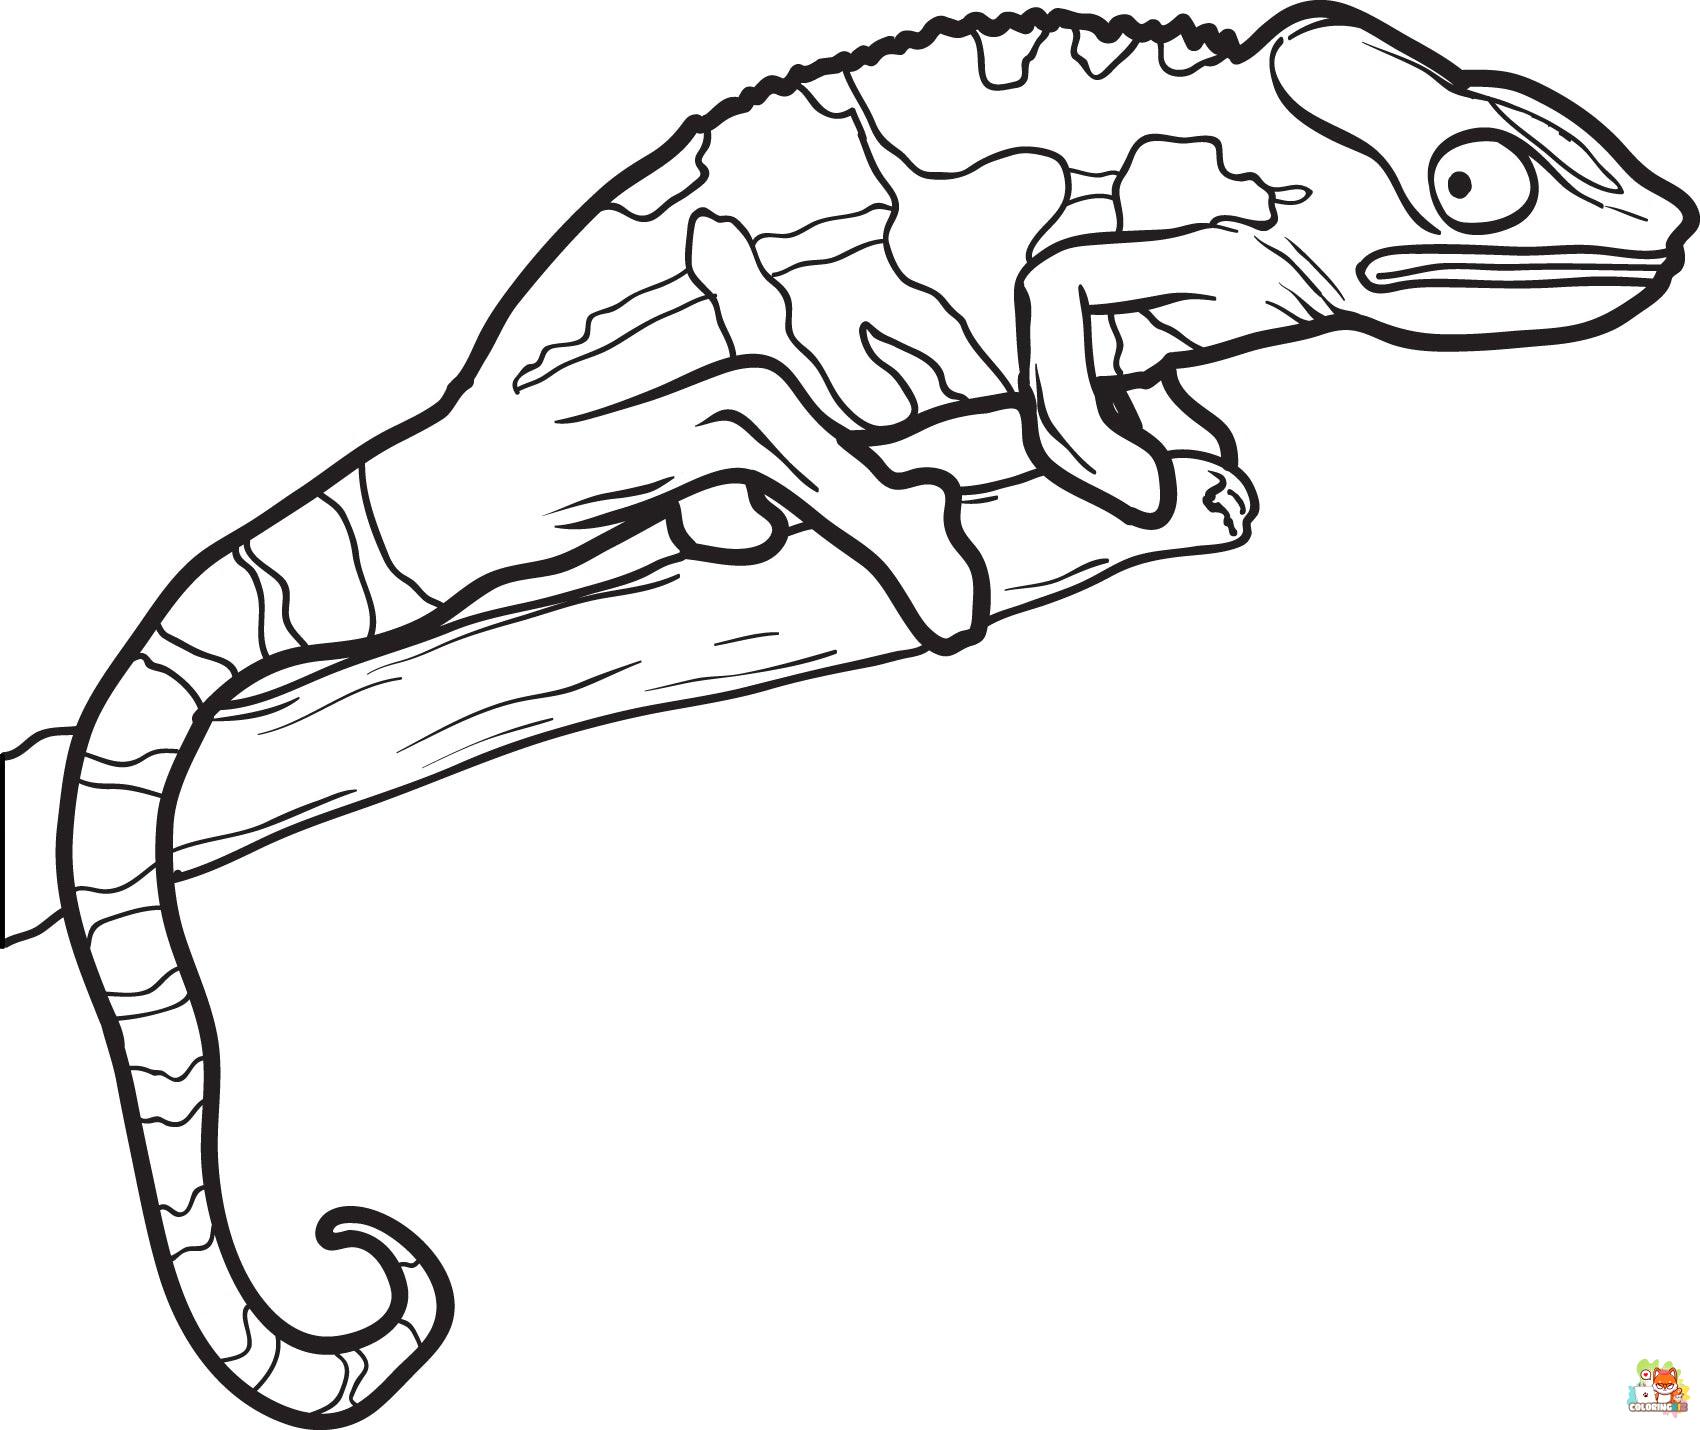 Printable Lizard coloring sheets 1